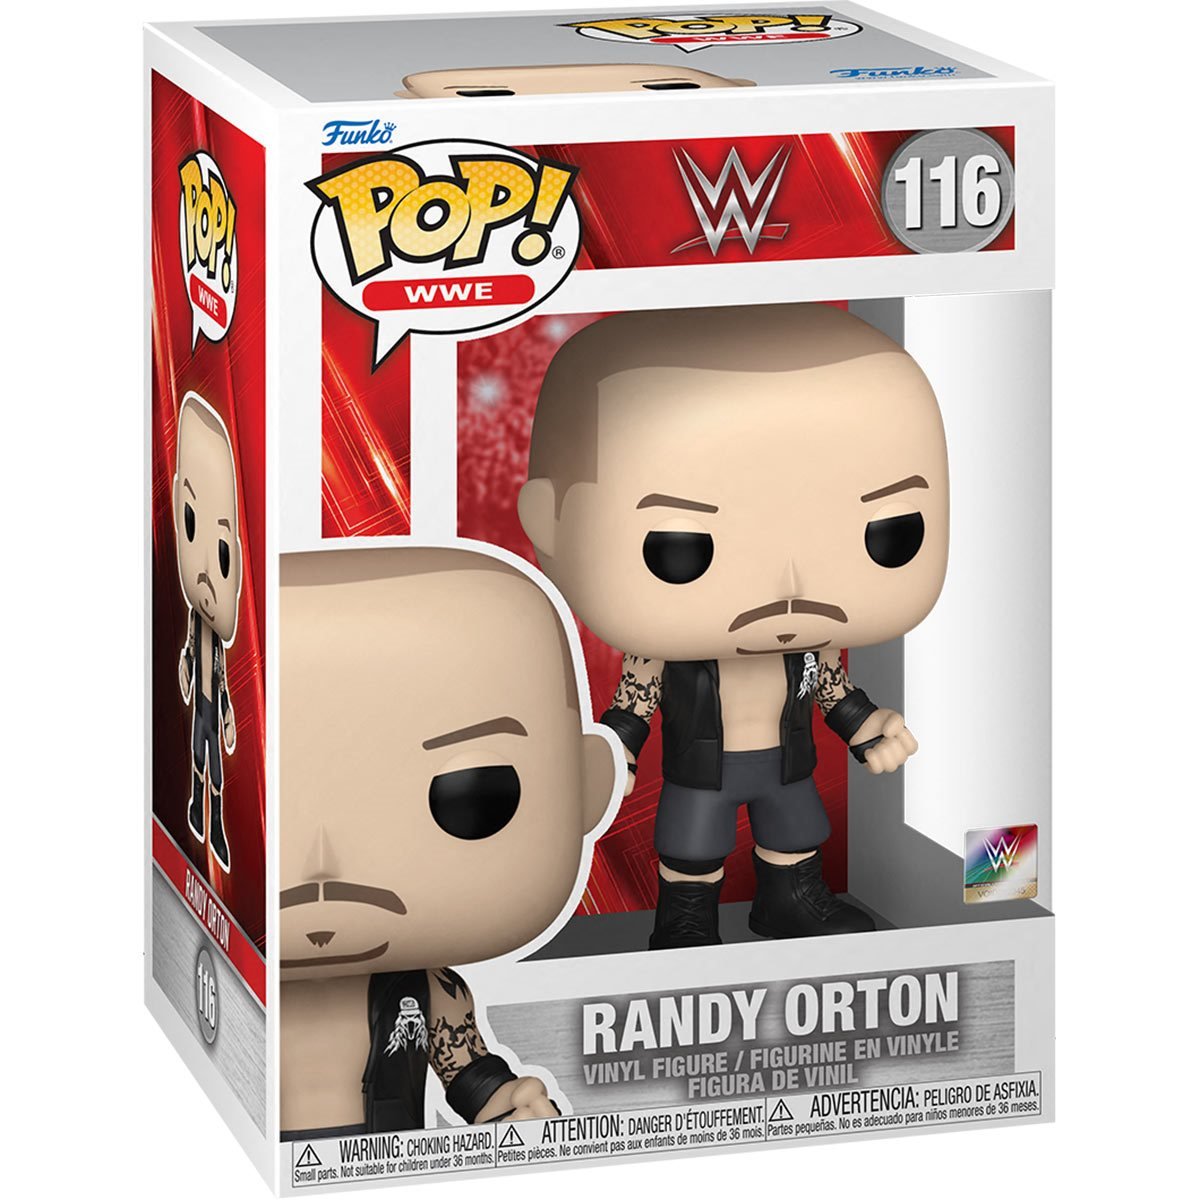 Randy Orton RKBro WWE Pop!